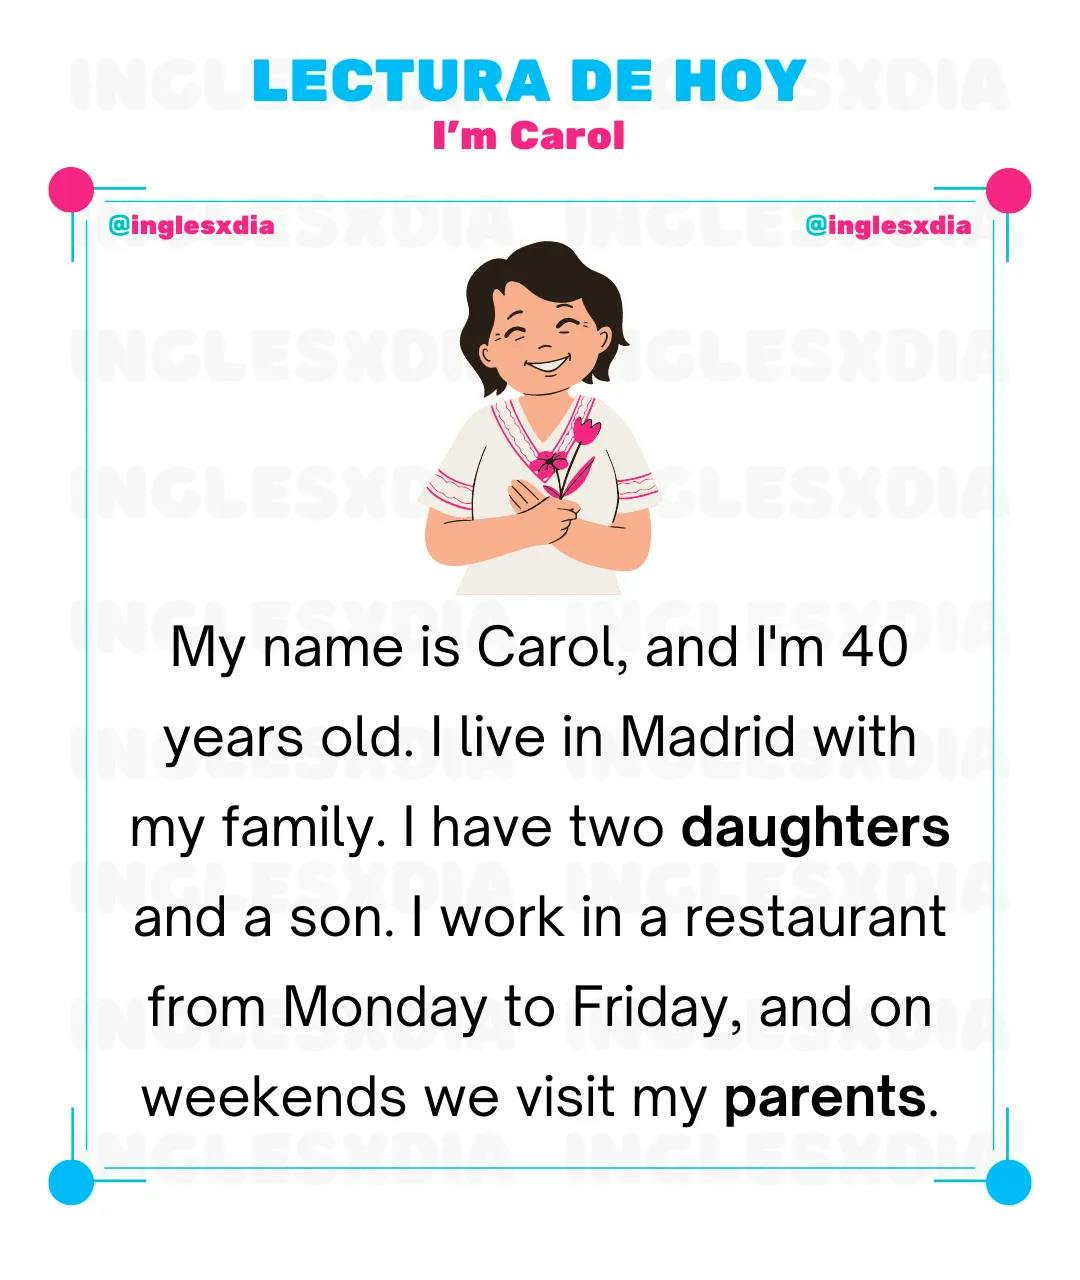 I'm Carol